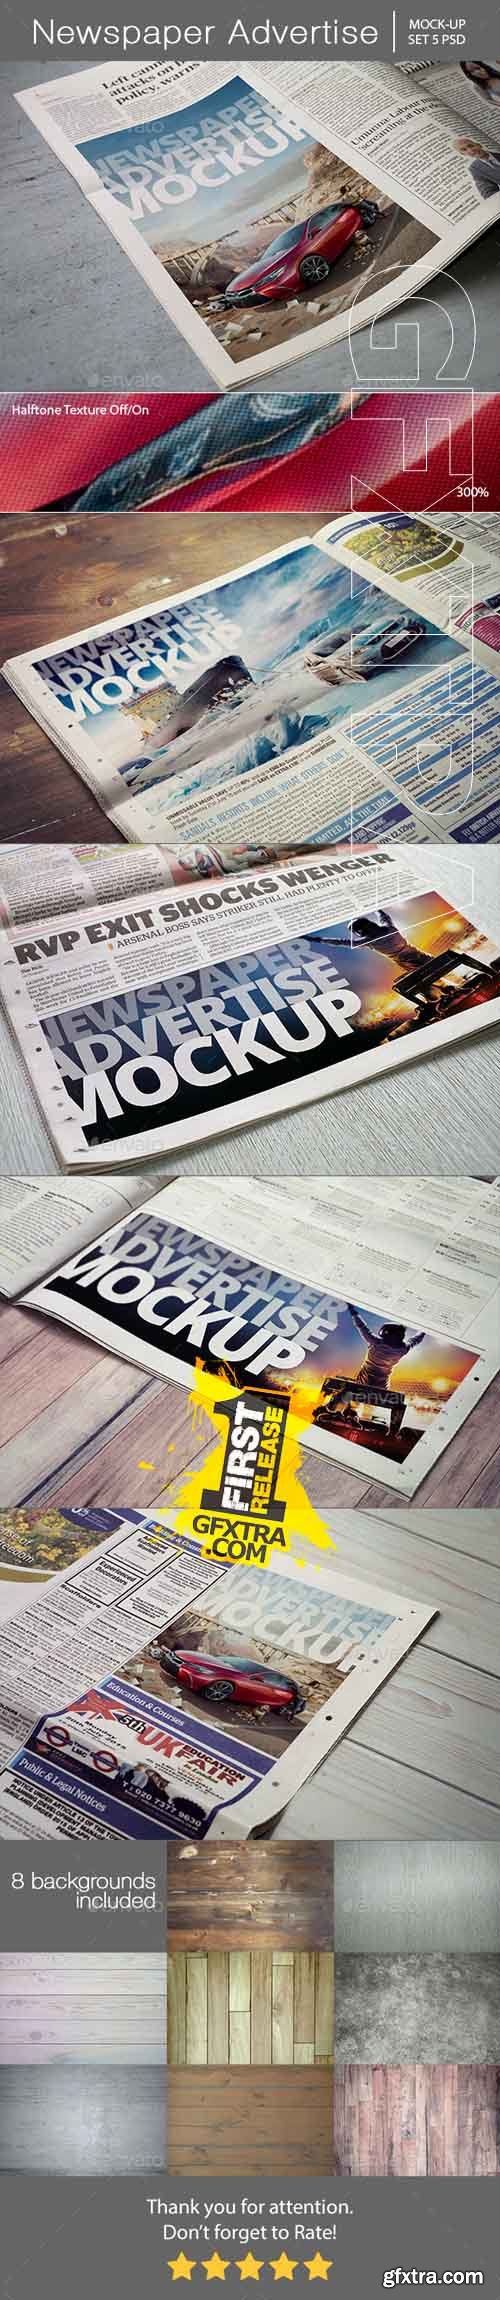 Newspaper Advertise Mockup 13345143